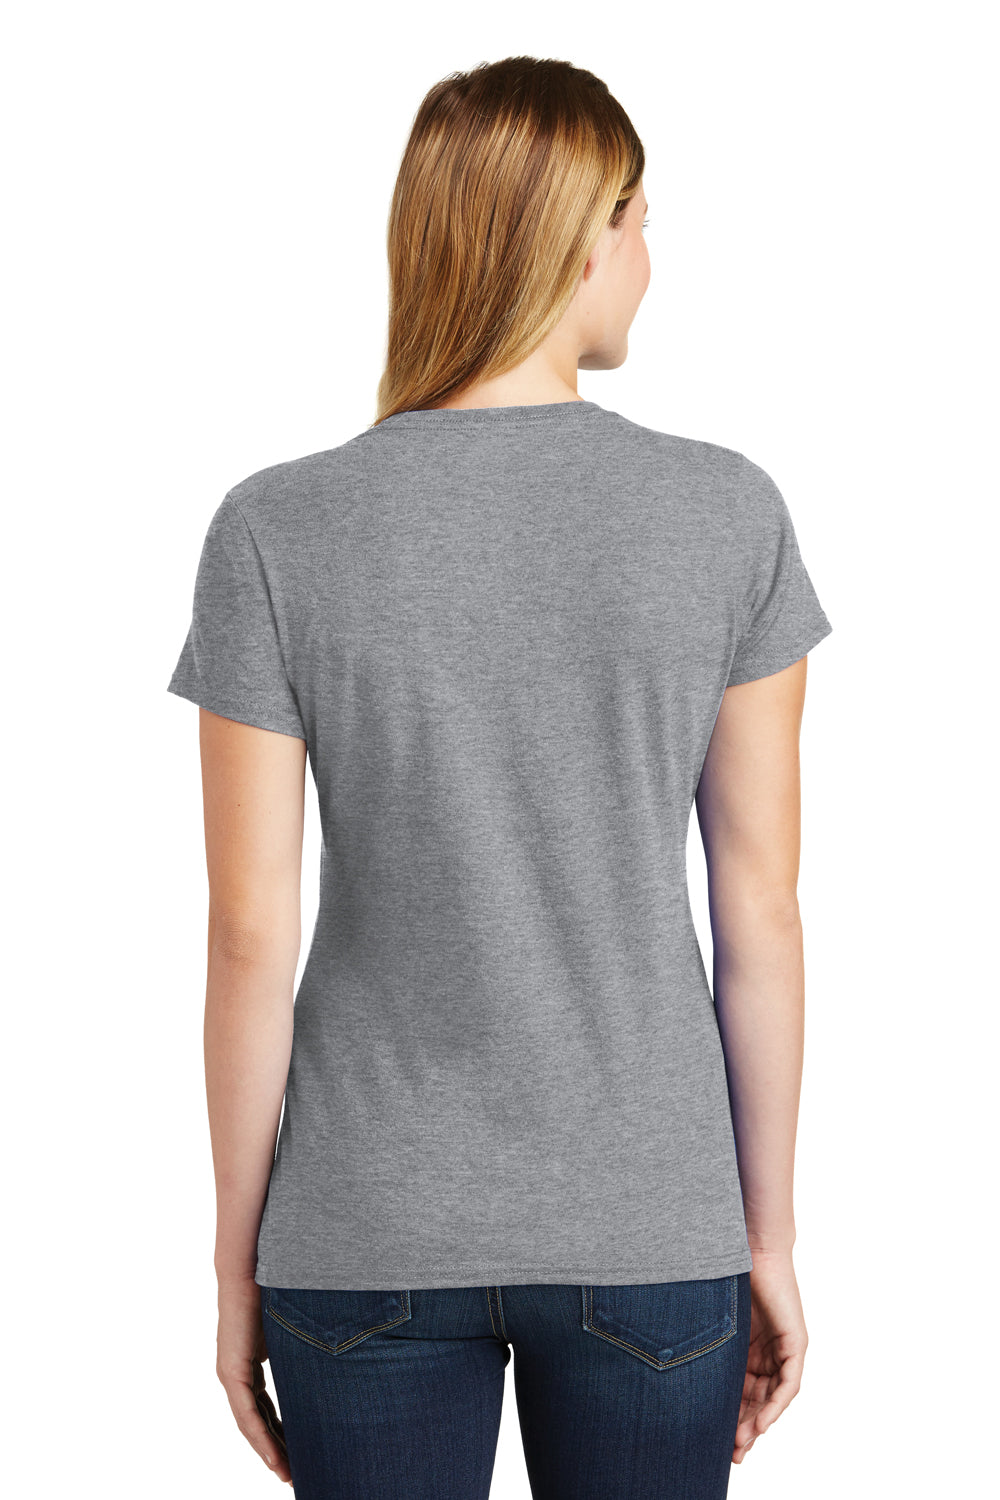 Port & Company LPC450 Womens Fan Favorite Short Sleeve Crewneck T-Shirt Heather Grey Back